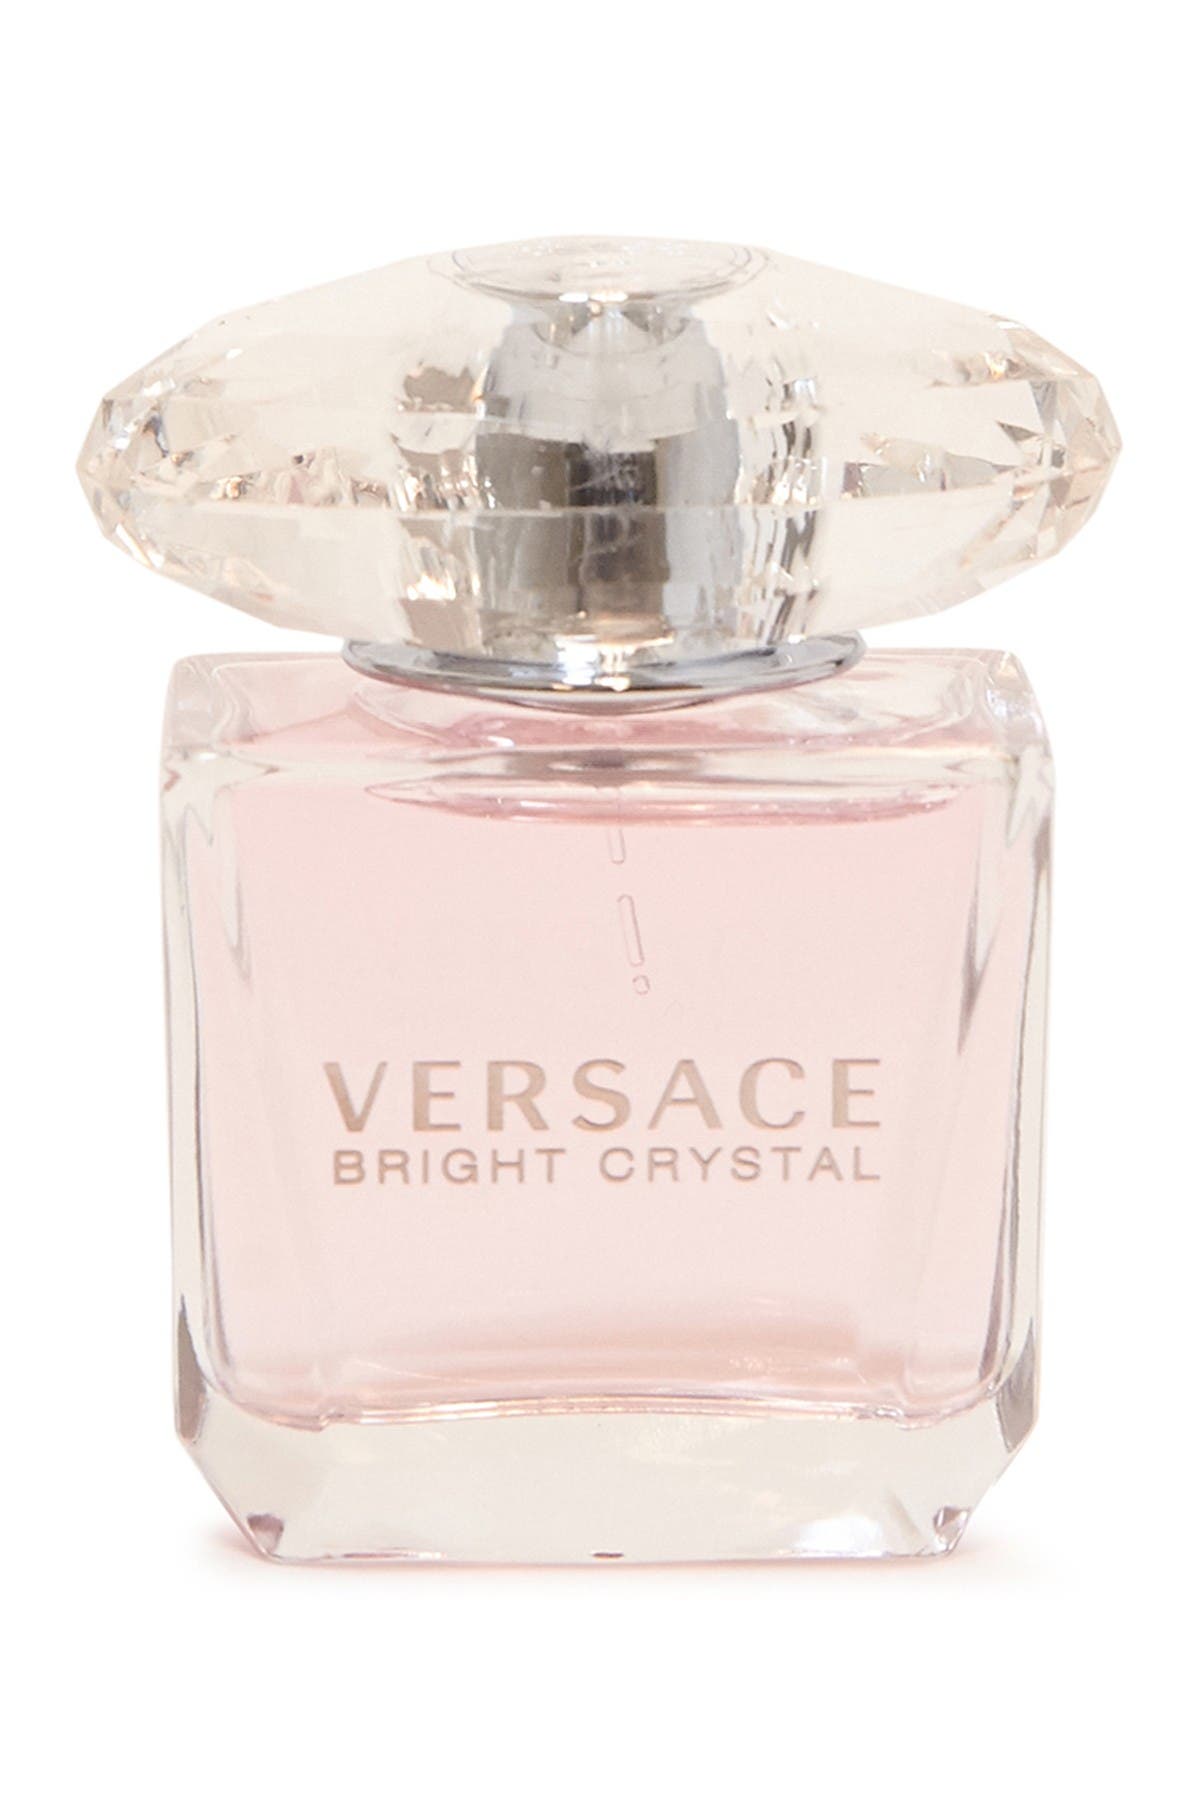 versace crystal clear perfume